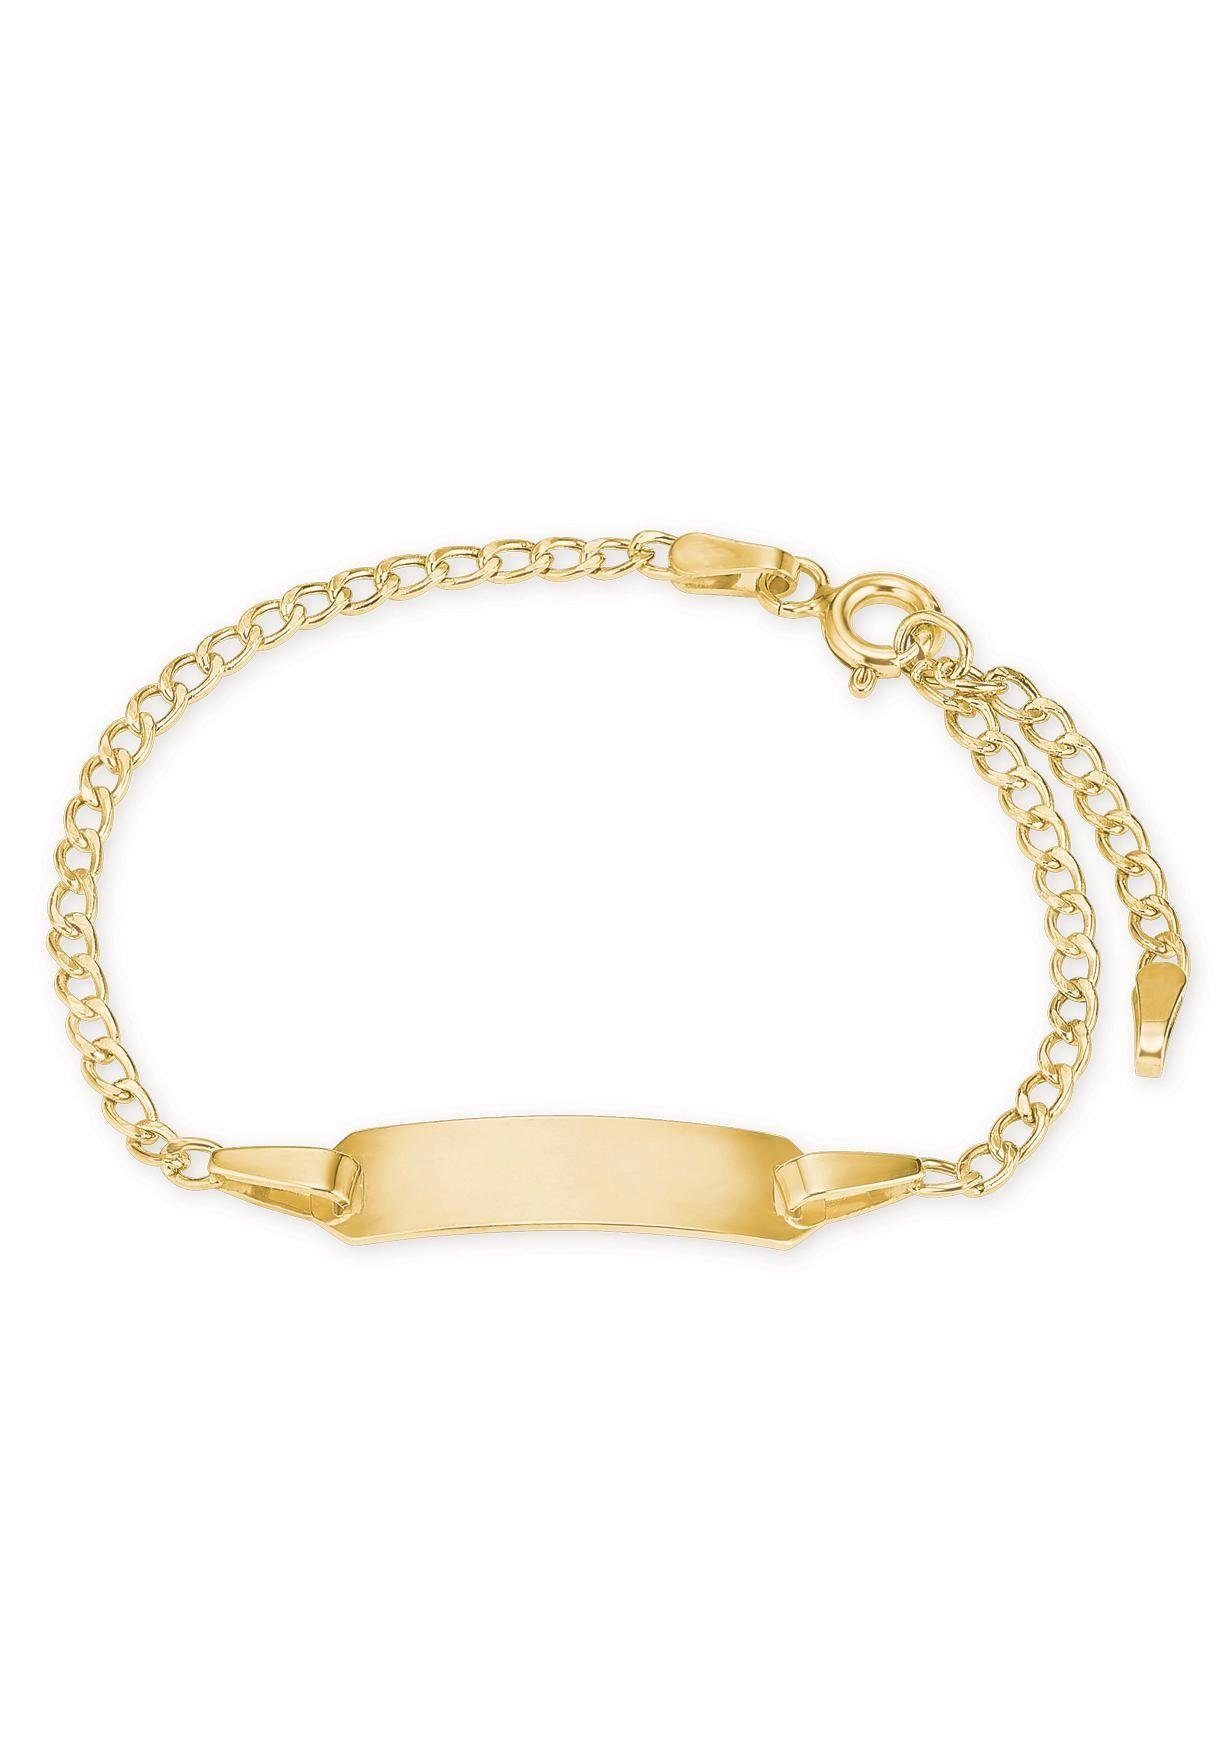 Amor Armband 2014338, Gold 375 | Silberarmbänder